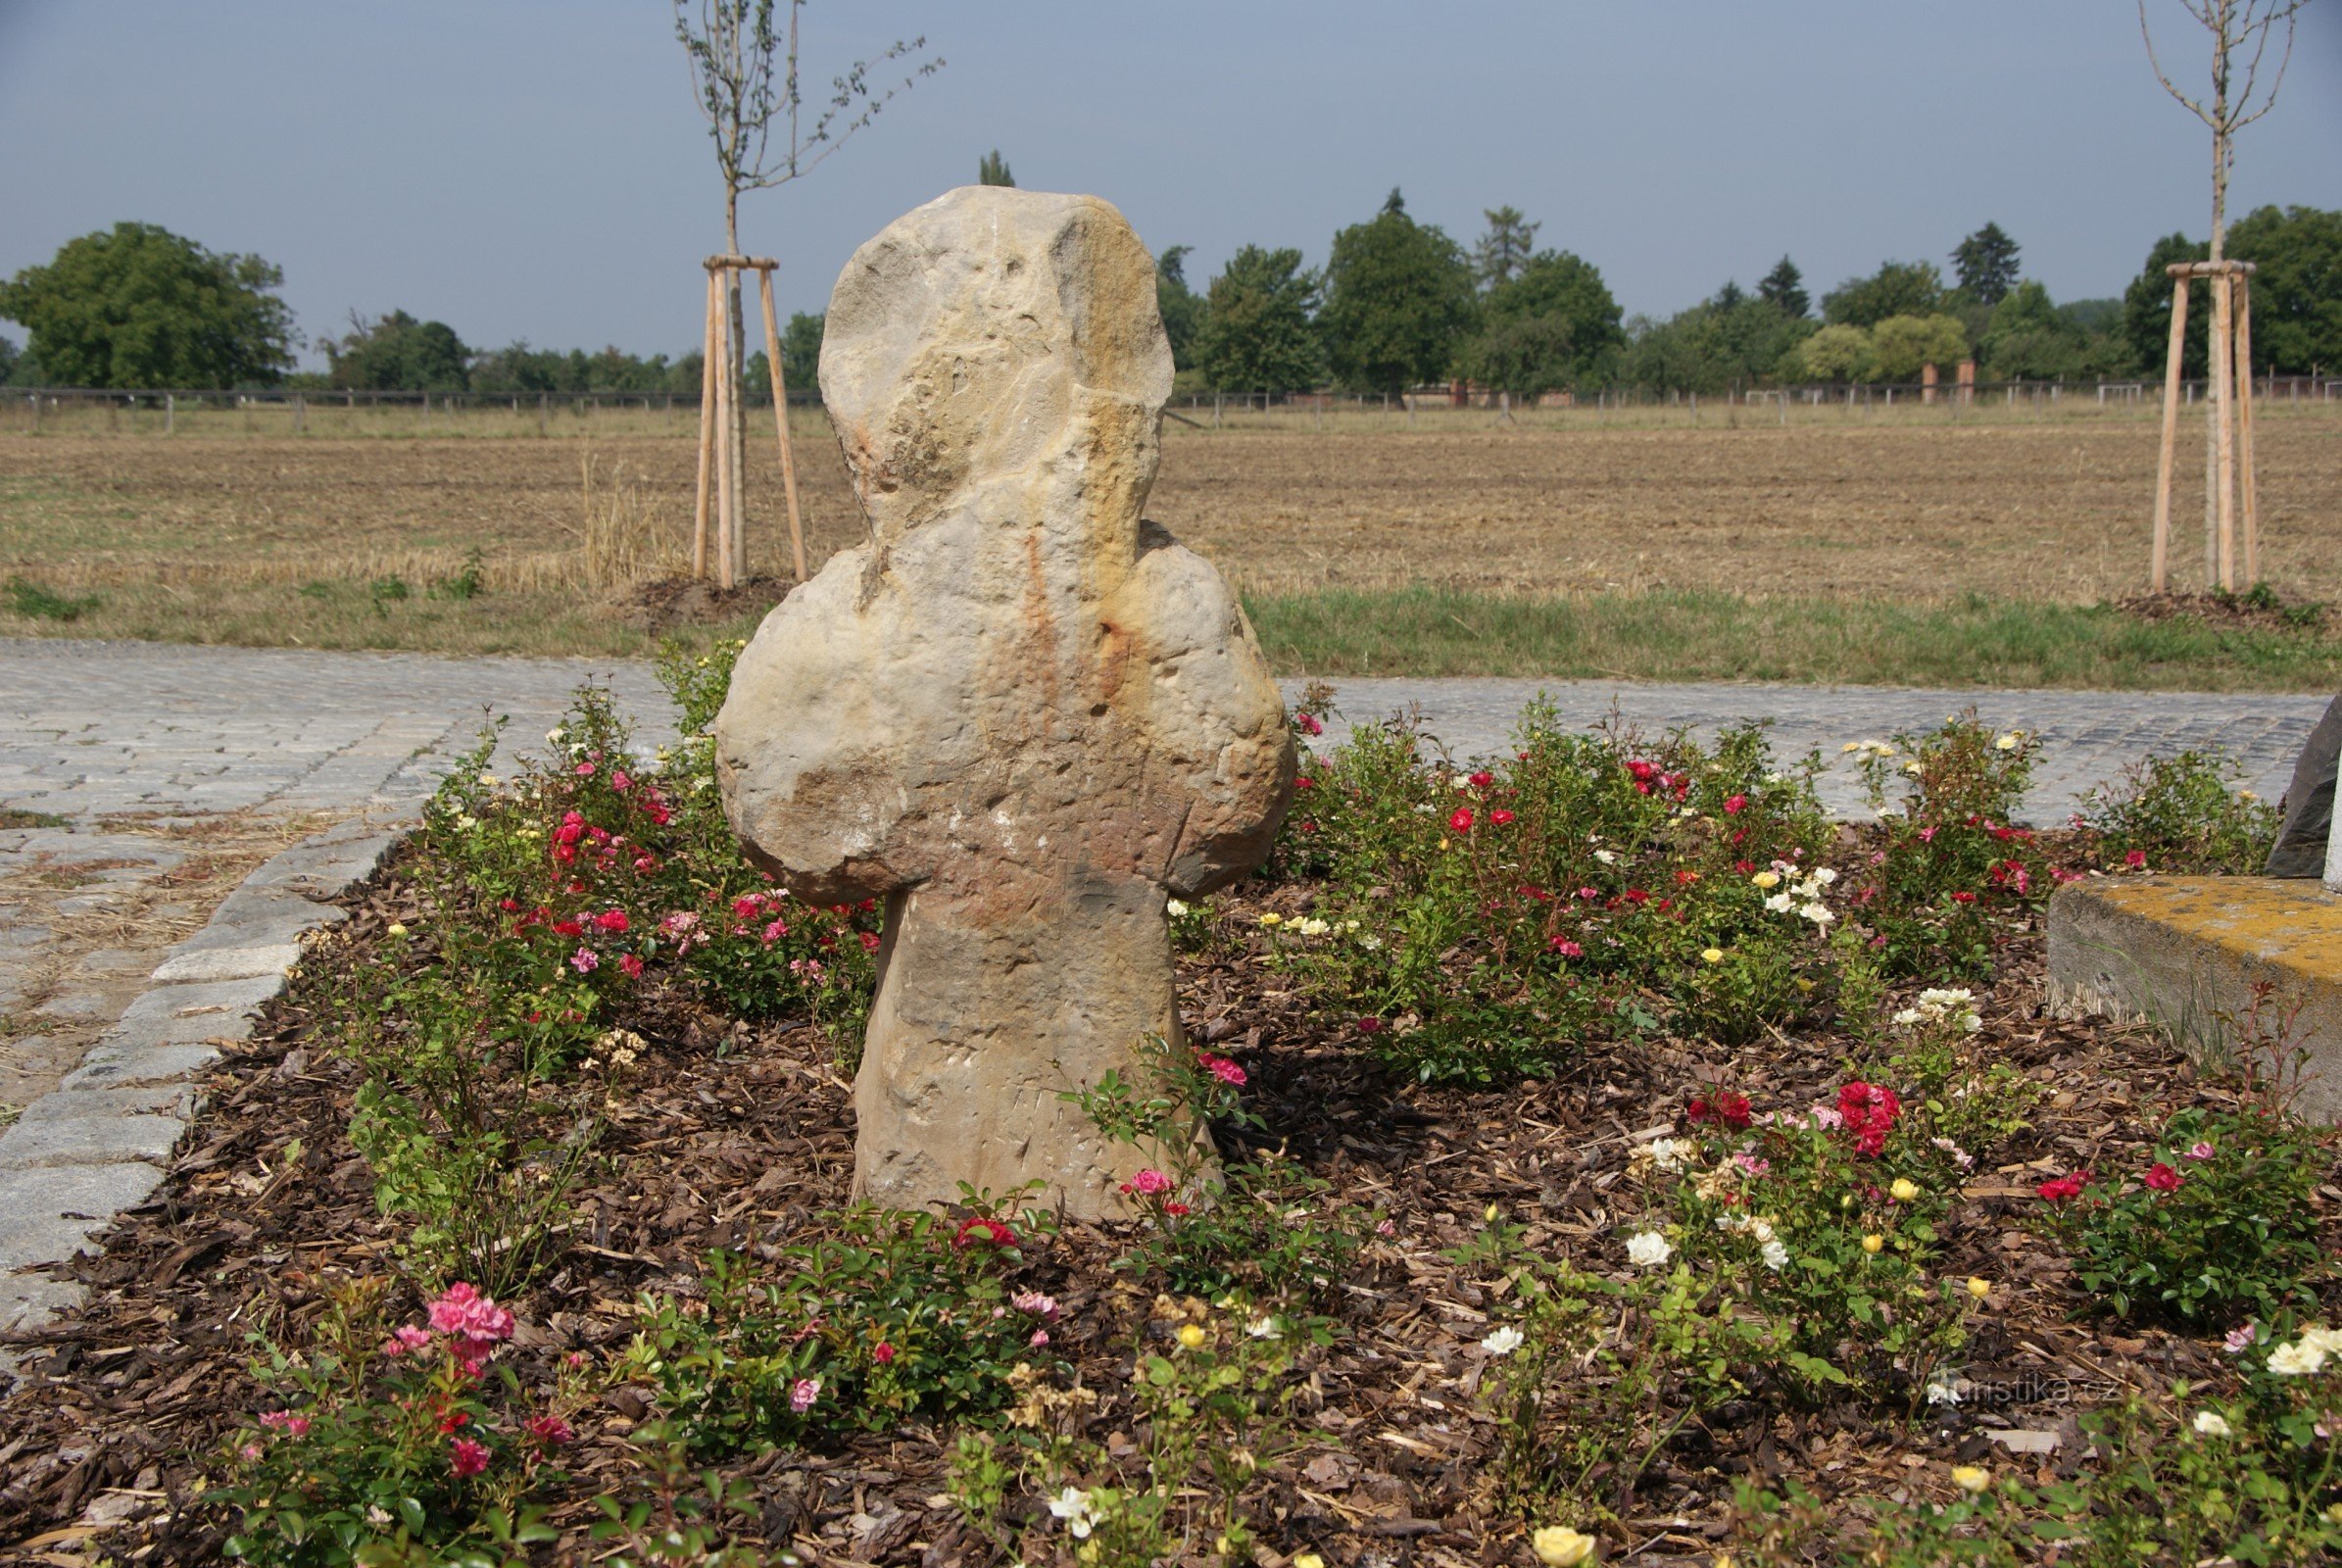 Encomendas (perto de Olomouc) - "nova" cruz de paz na escala agrícola